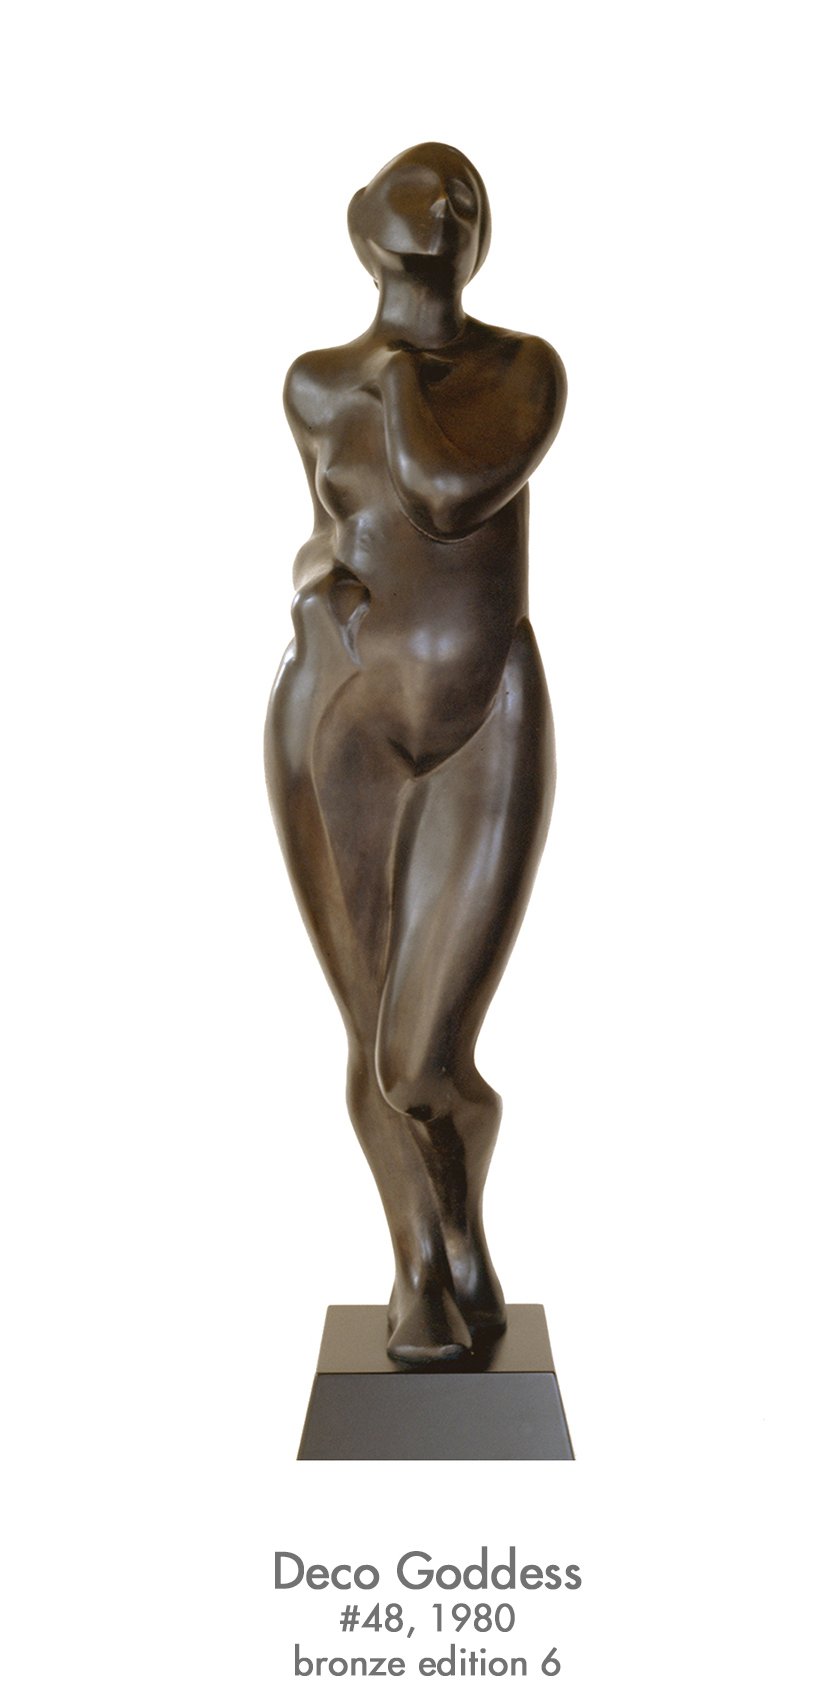 Deco Goddess, 1980, bronze edition 6, #48